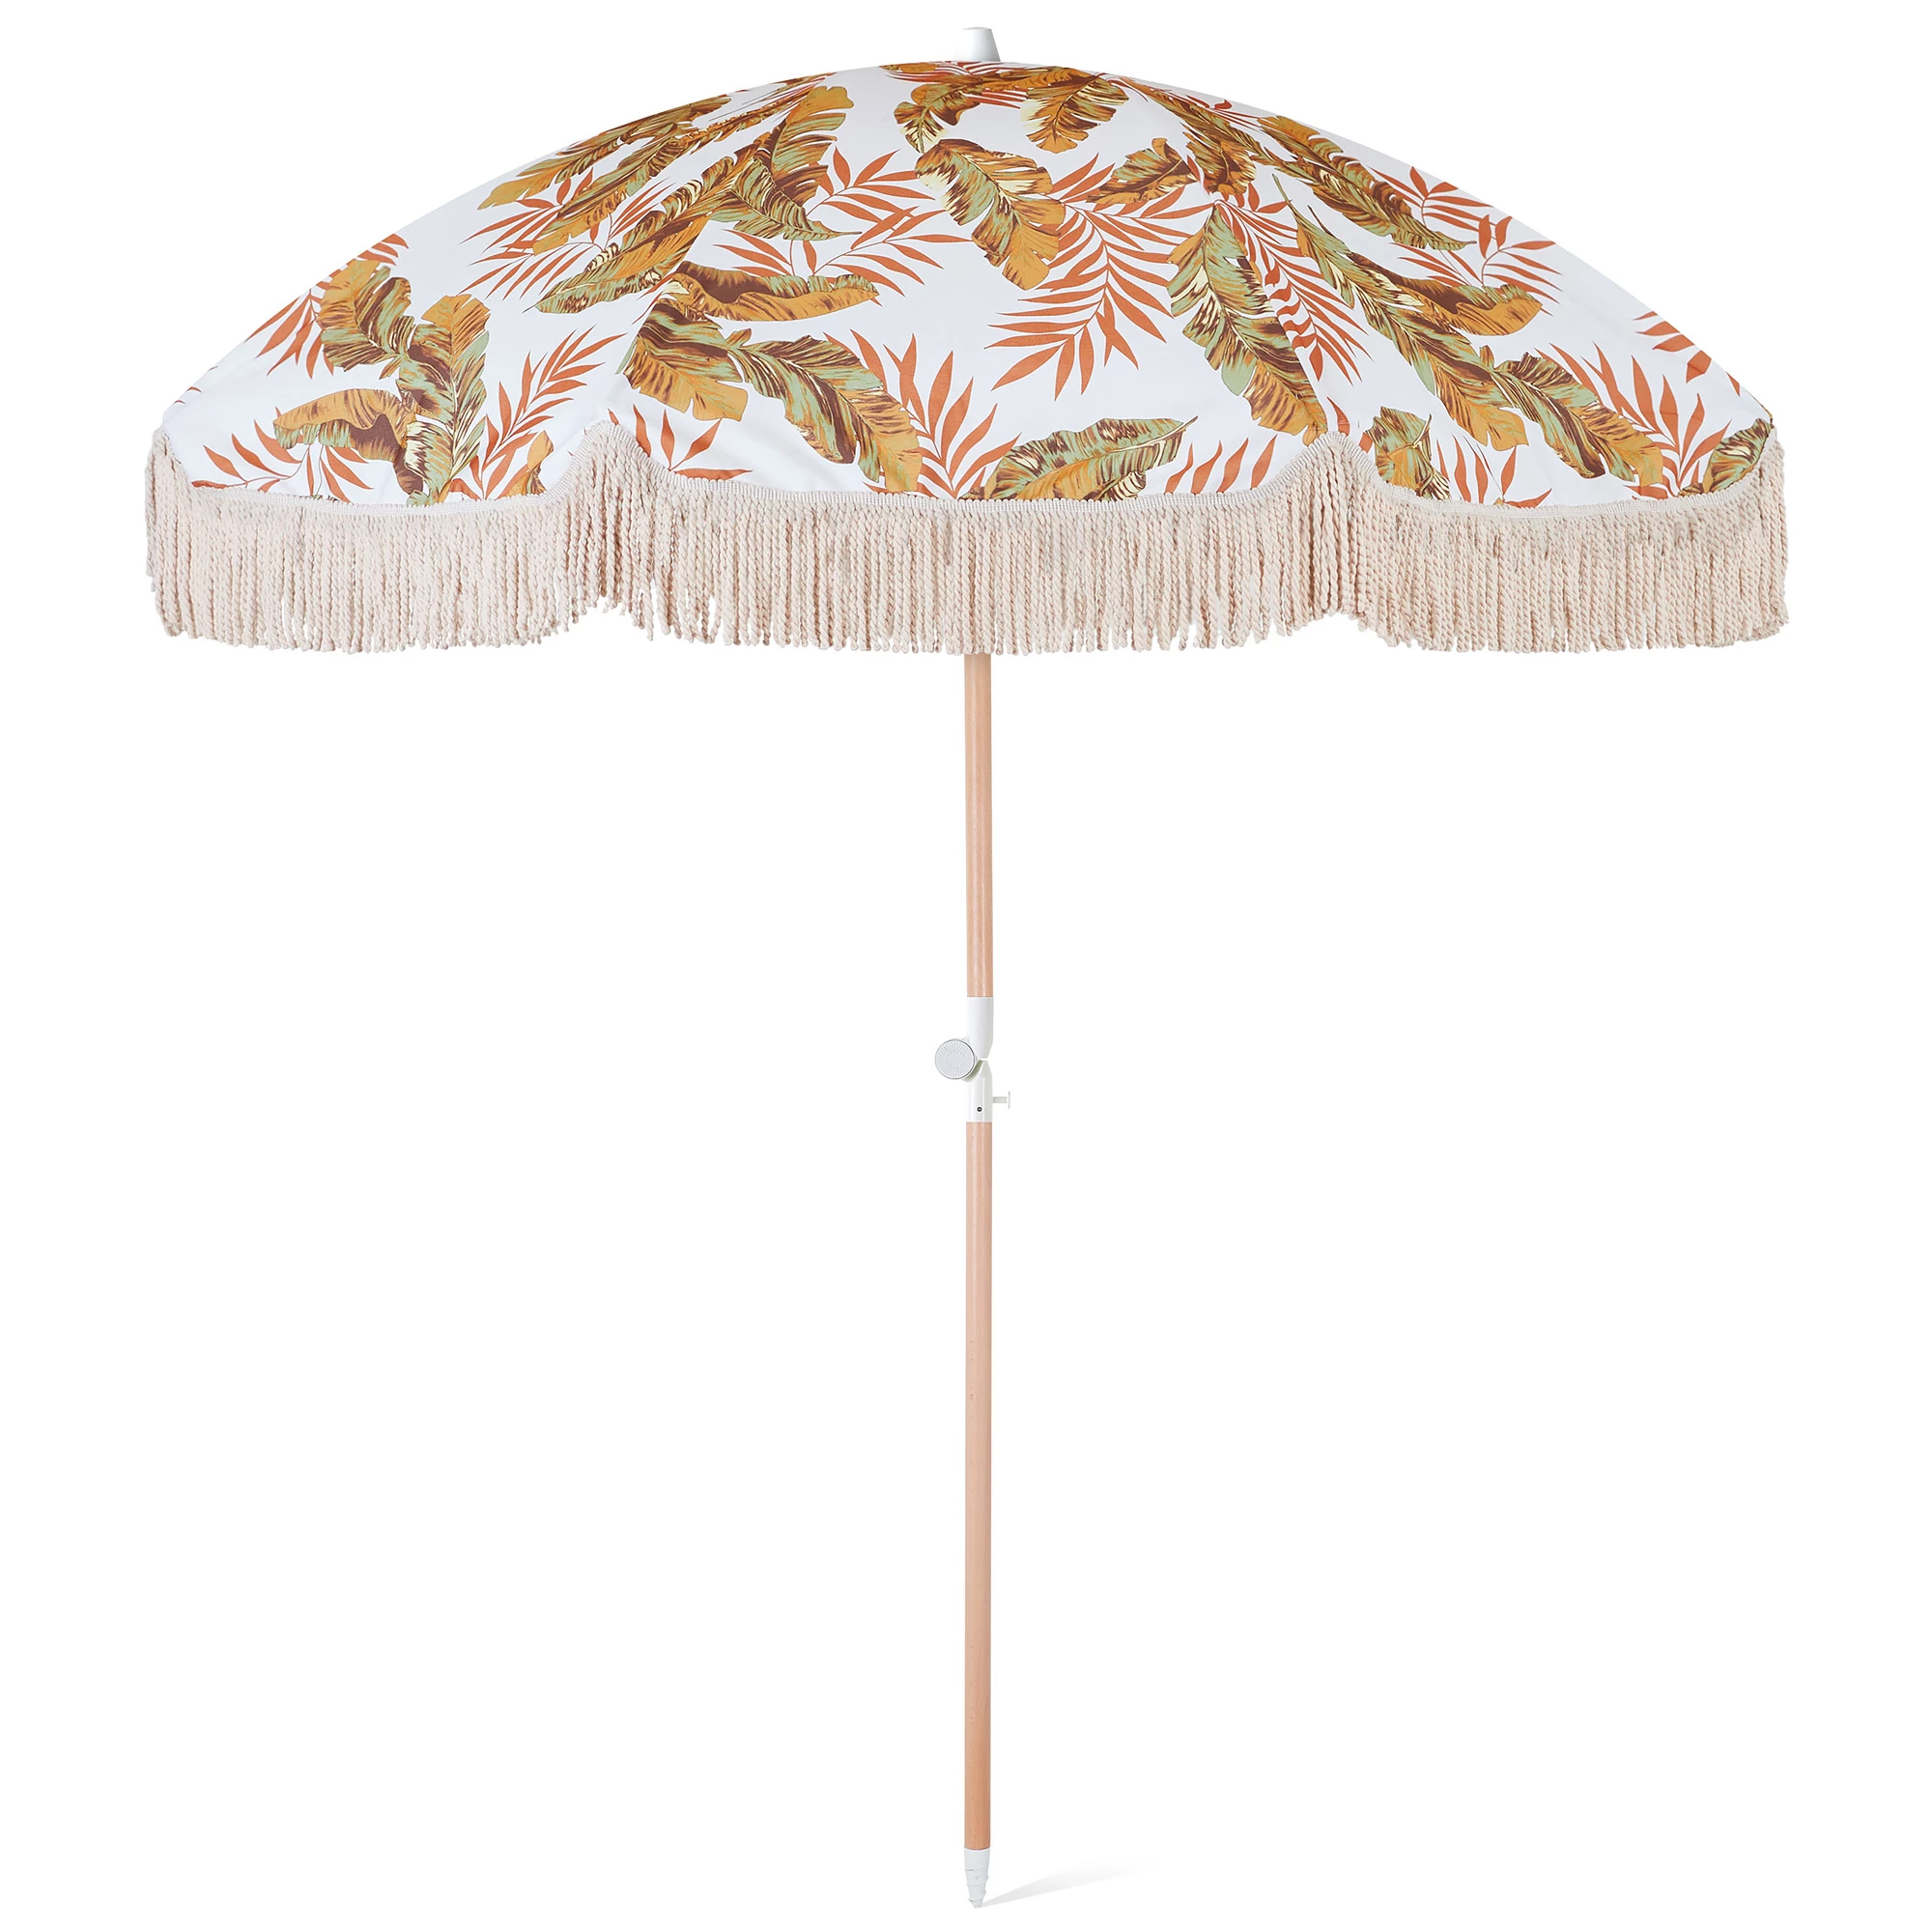 6.5ft Tilt Wood Pole Beach Umbrella With Tassels